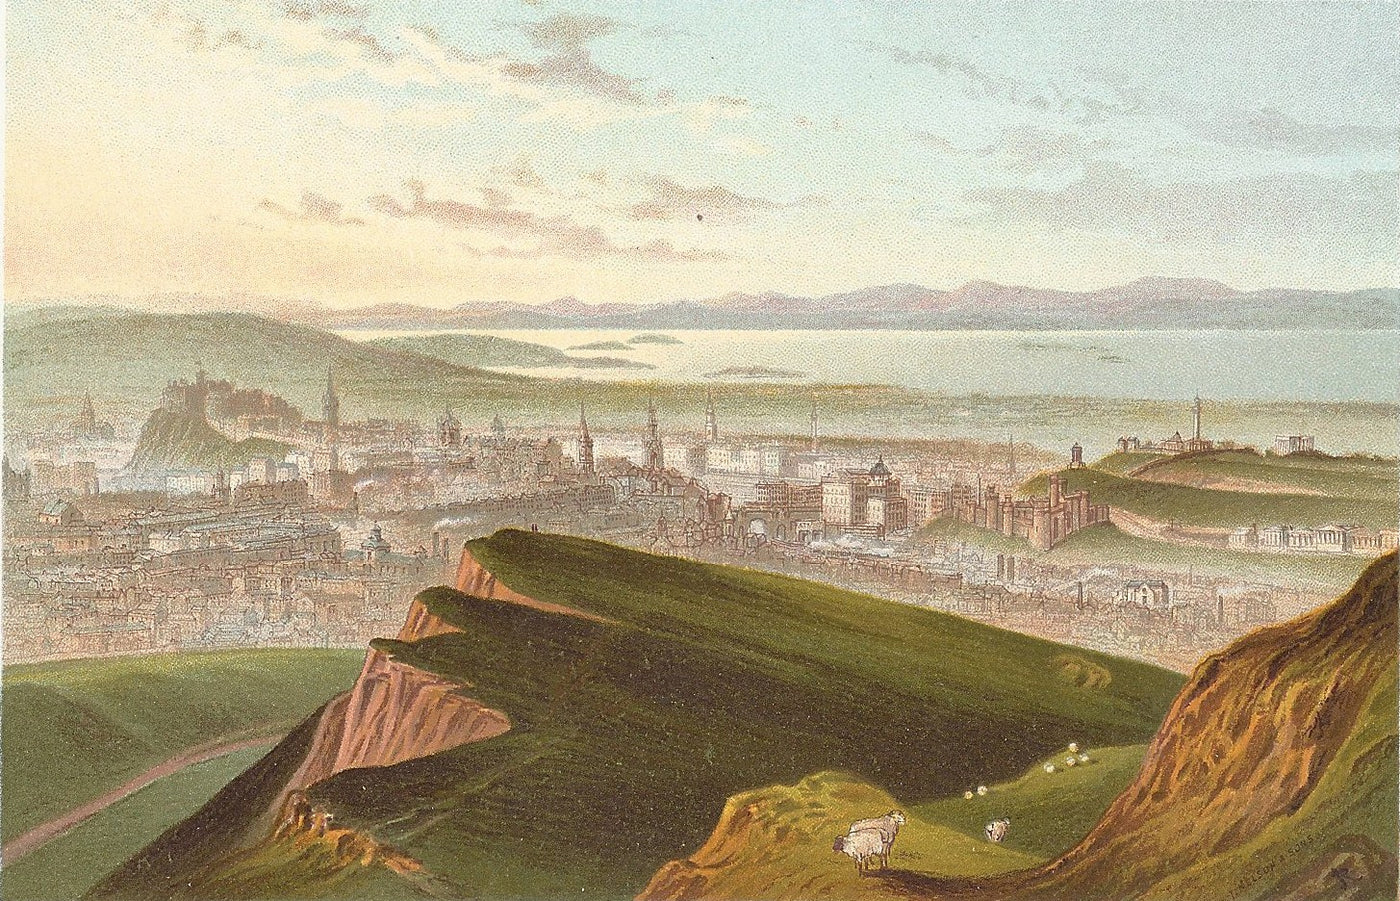 Arthur's Seat Edinburgh Scotland guaranteed antique print 1889